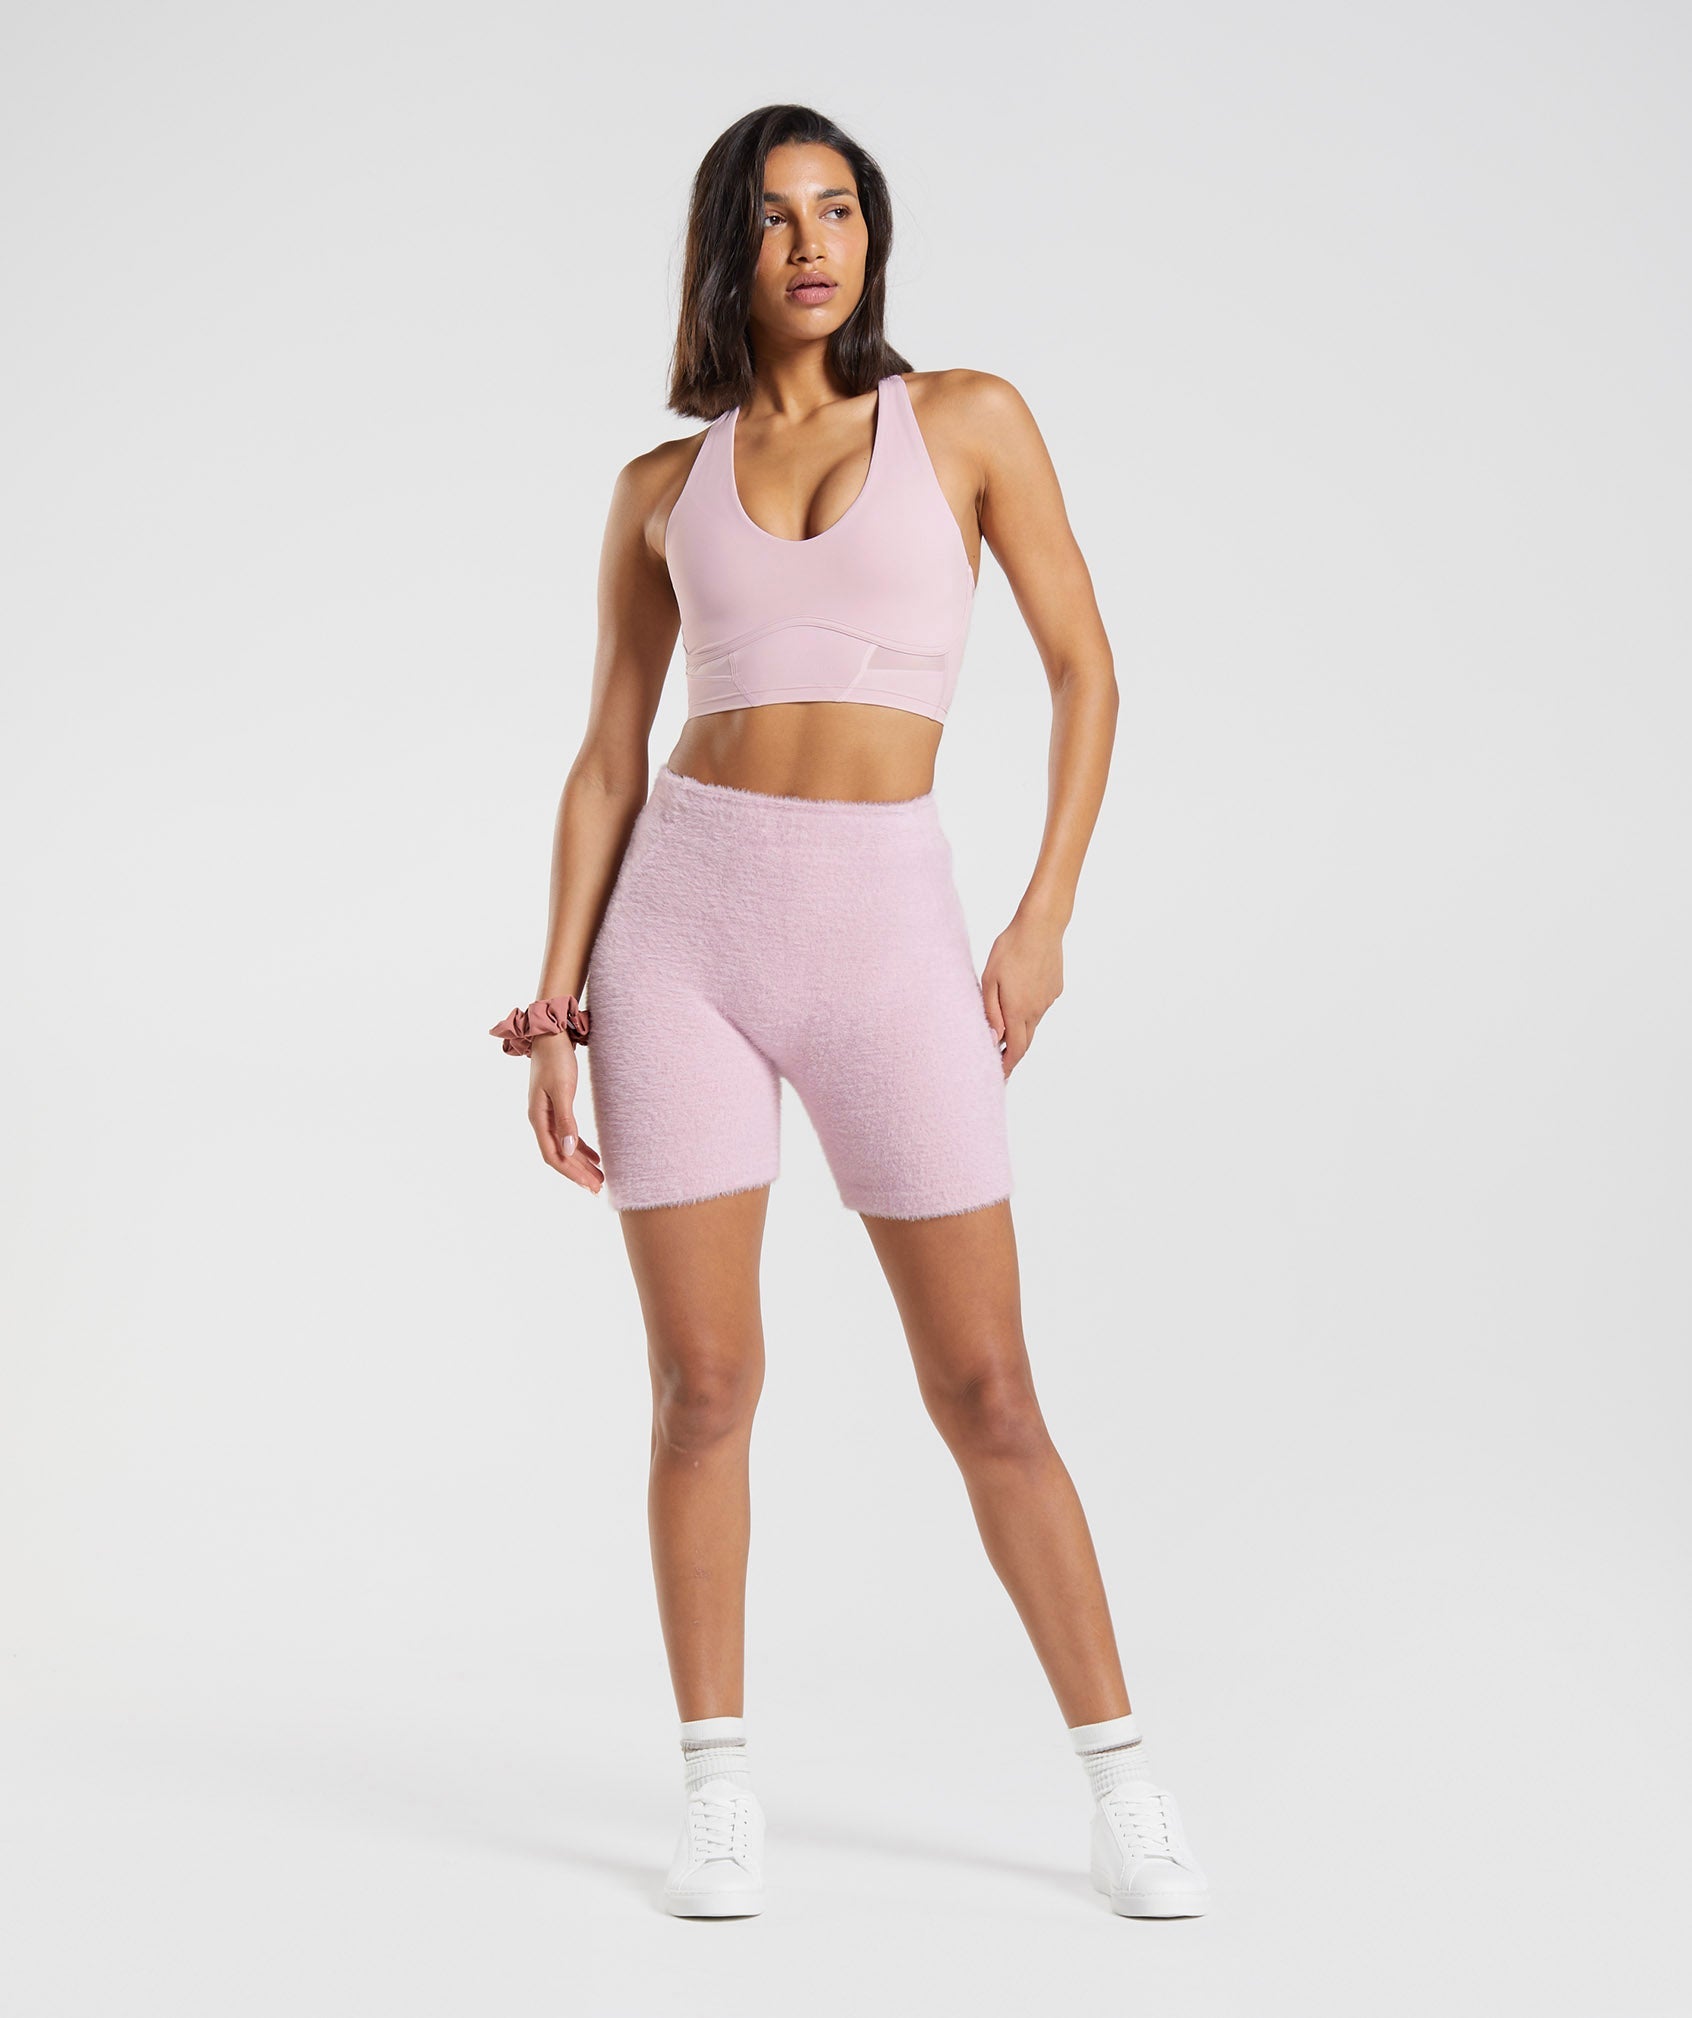 Gymshark Whitney Eyelash Knit Shorts - Pressed Petal Pink